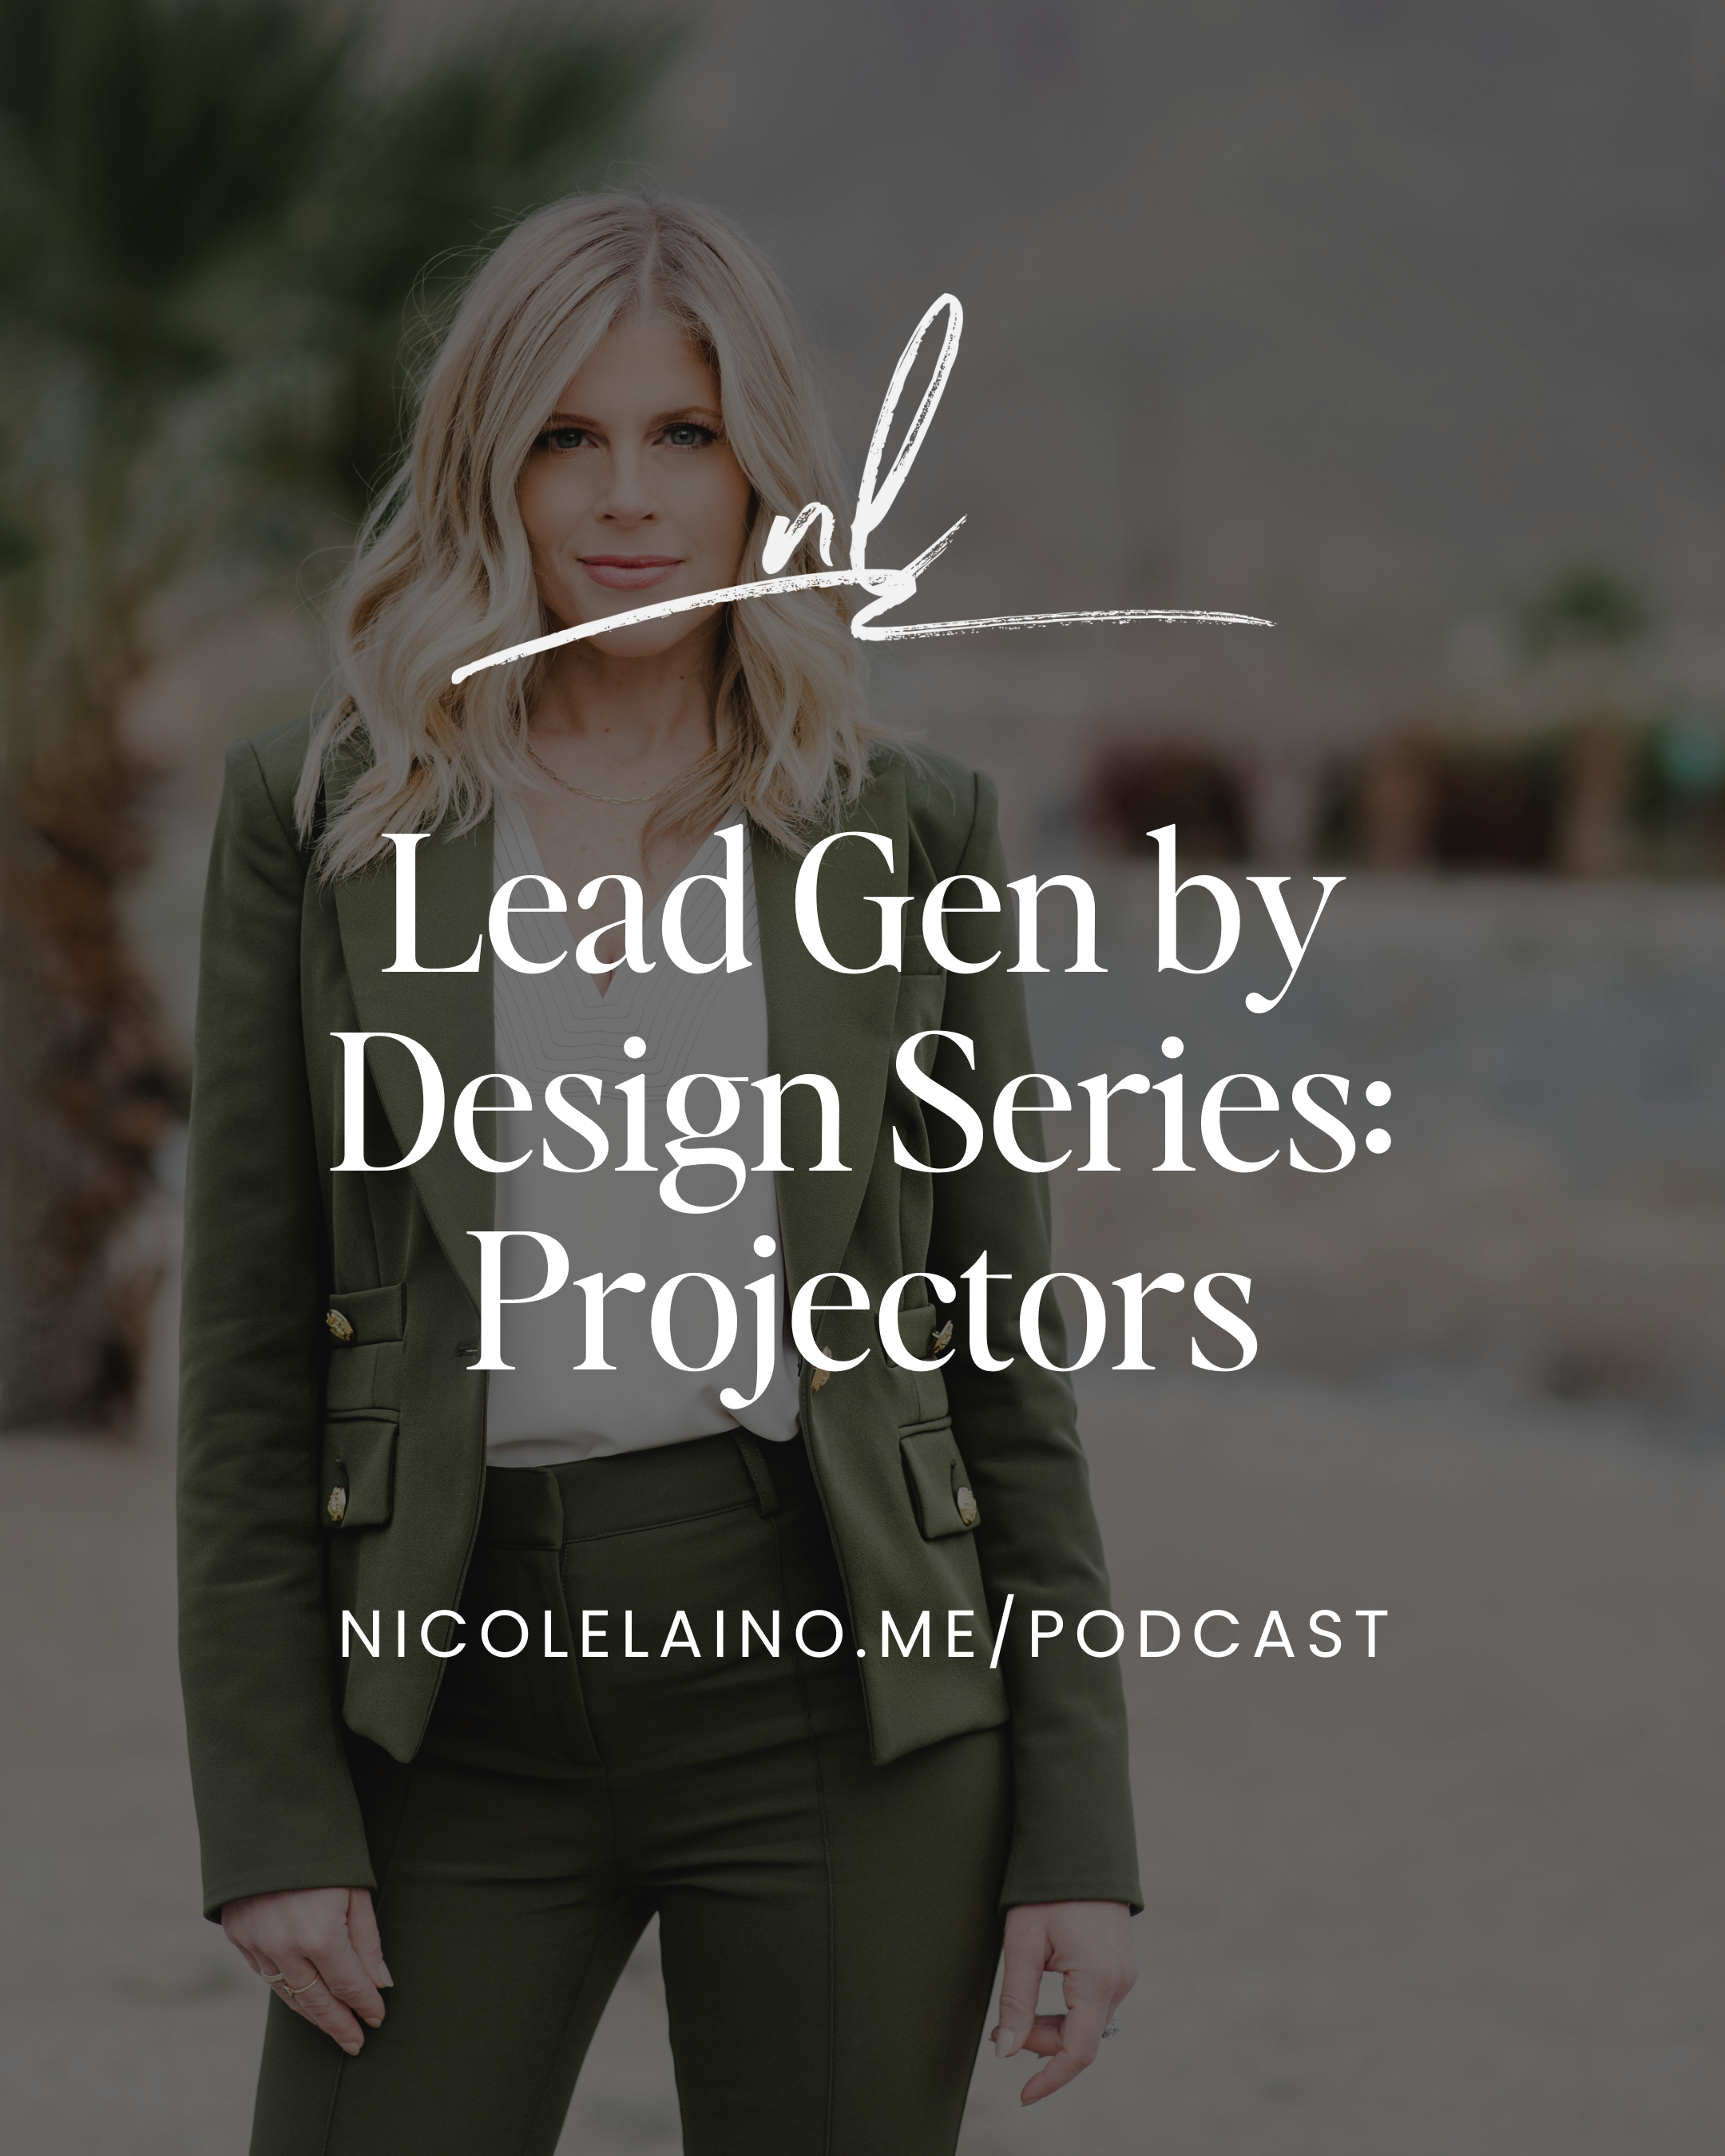 Lead Gen by Design Series: Projectors